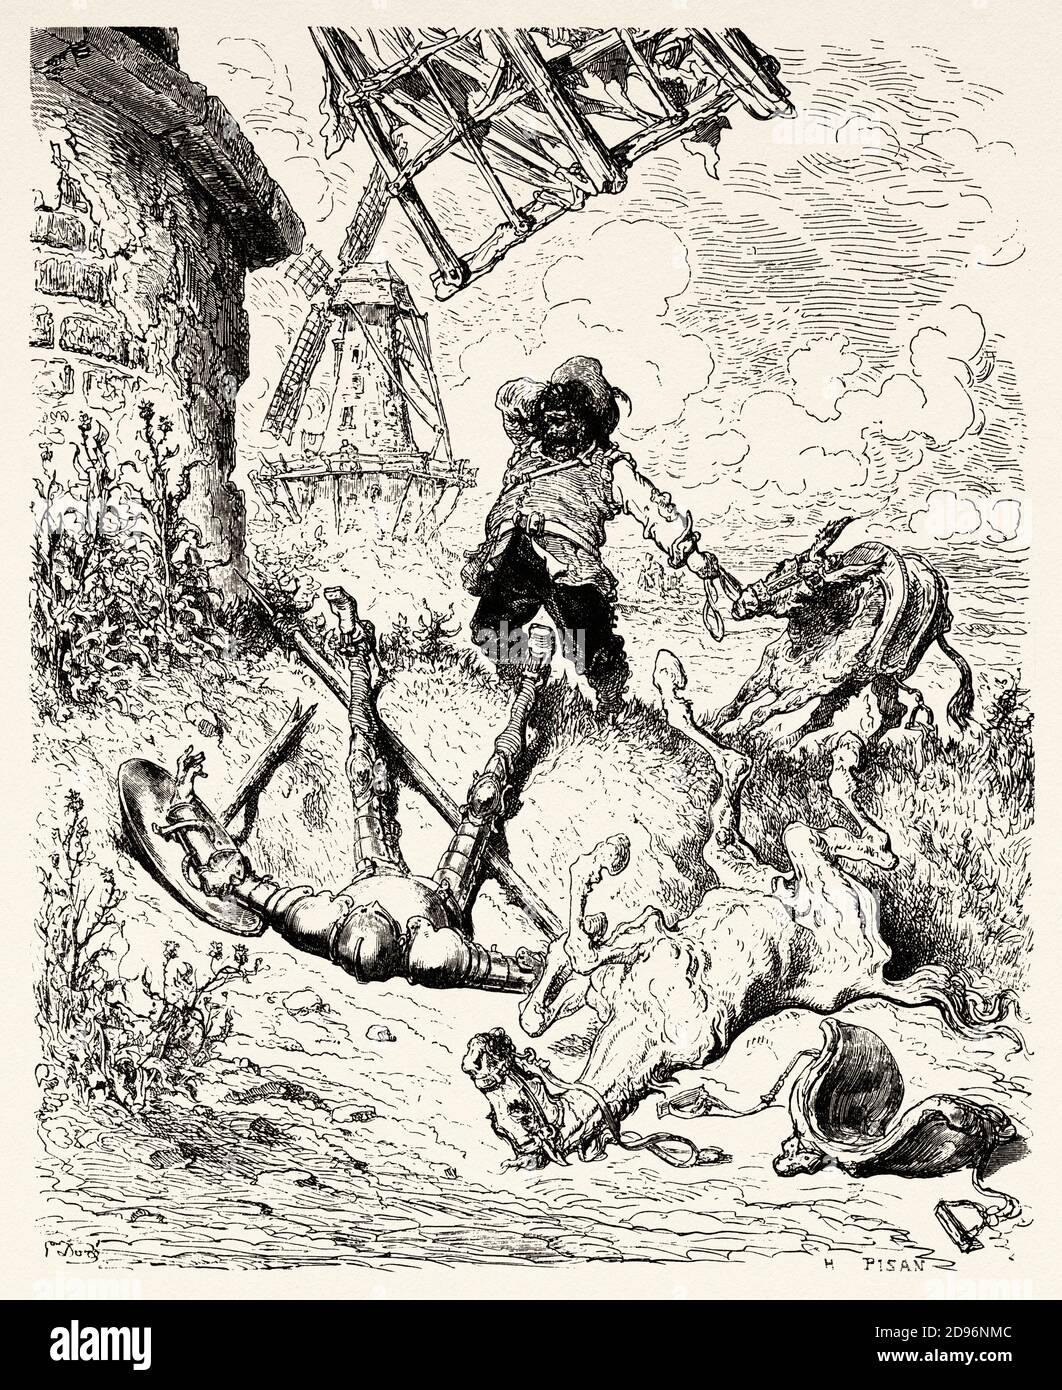 Sancho comes to Don Quixote's aid. Don Quixote by Miguel de Cervantes Saavedra. Old XIX century engraving illustration by Gustave Dore Stock Photo